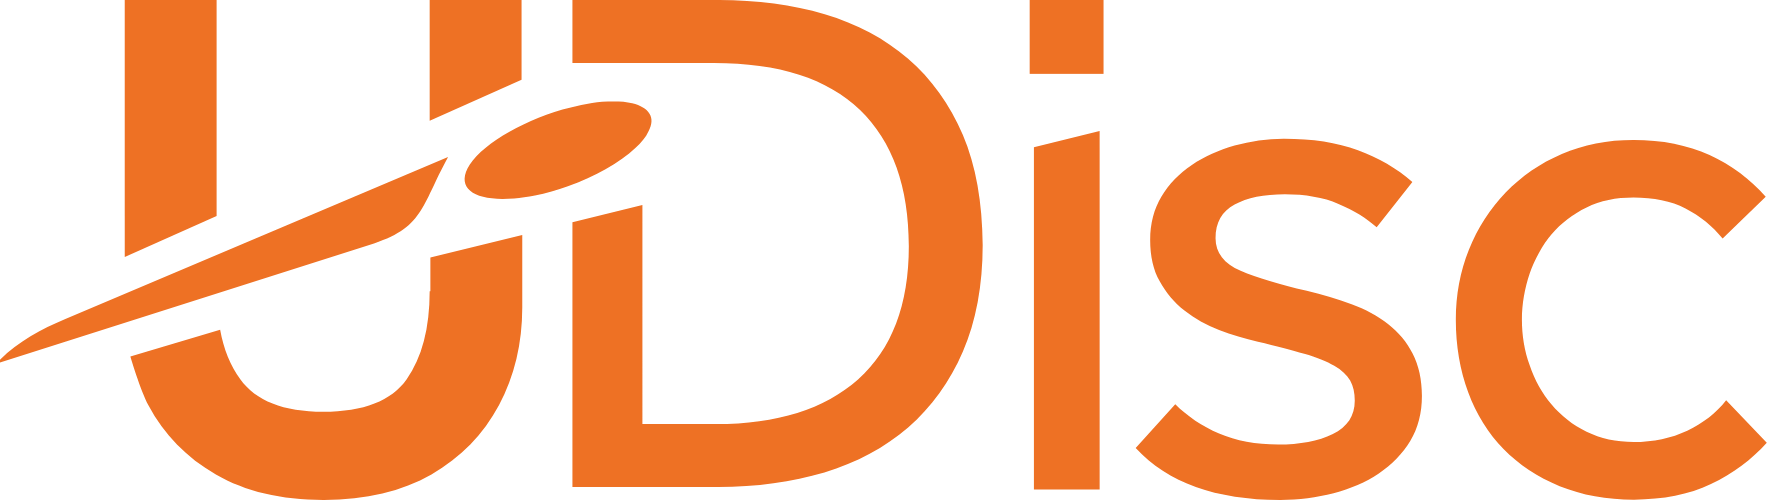 UDisc logo with orange logo and text